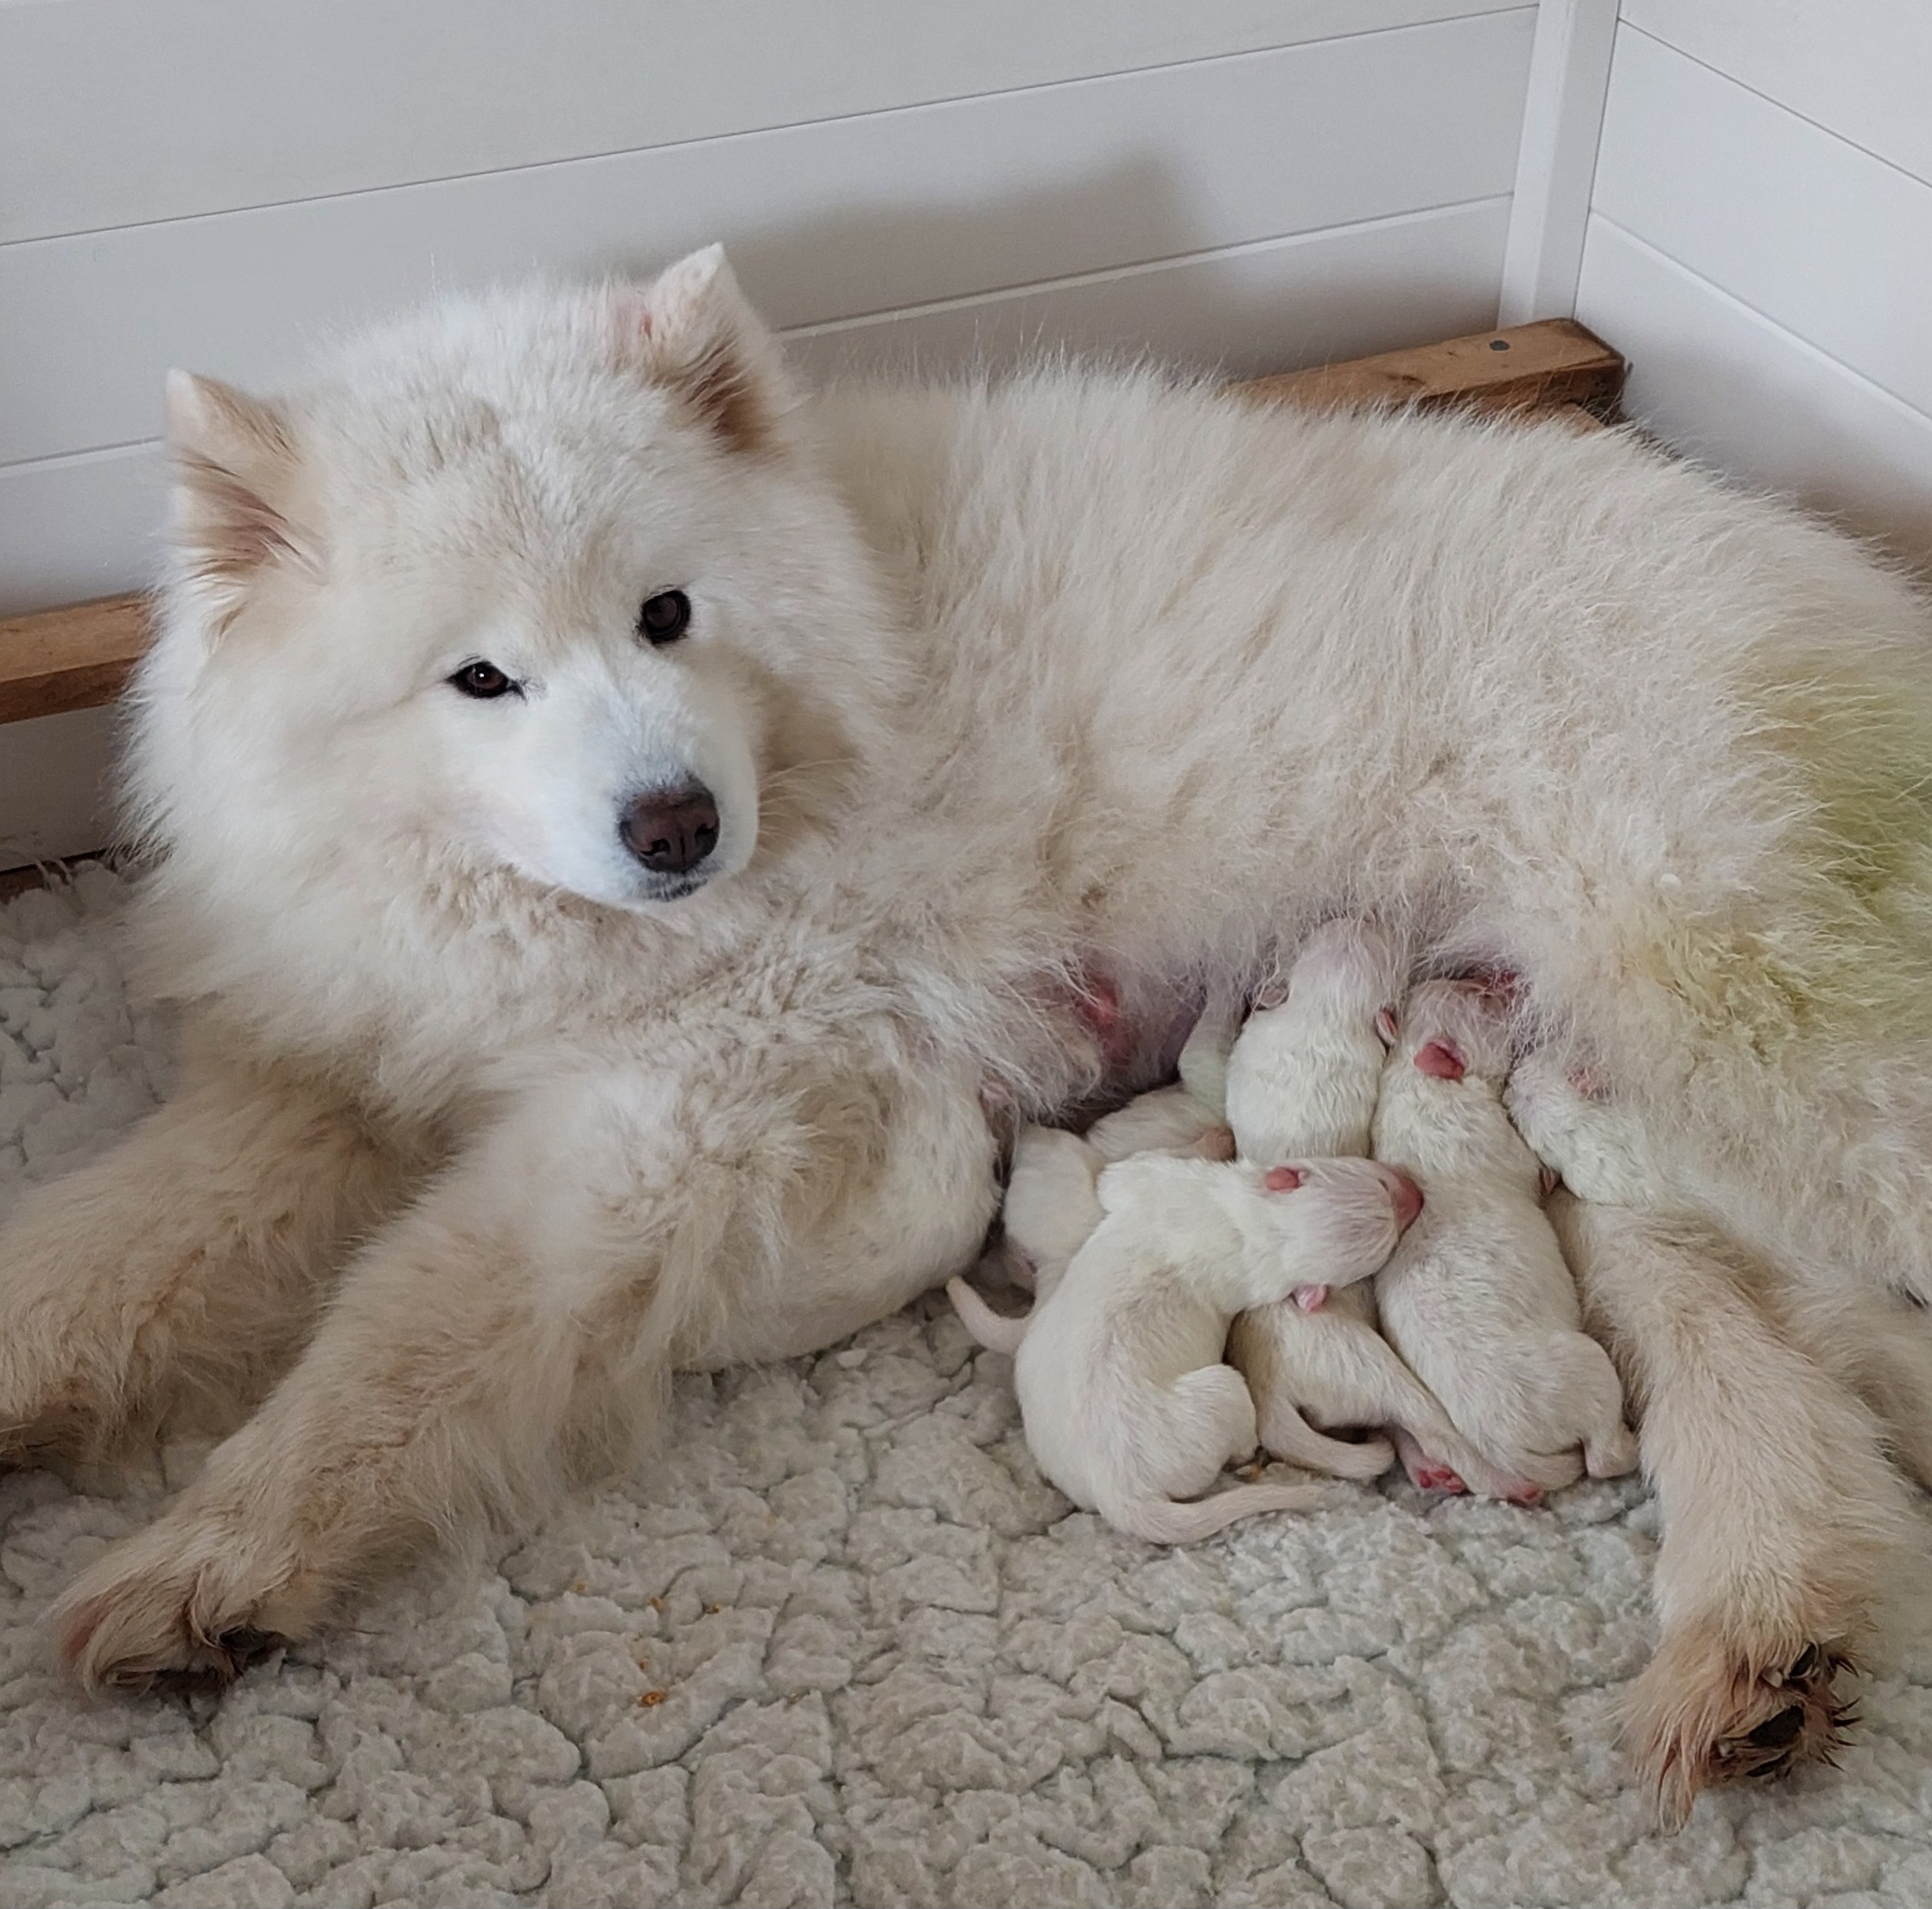 Gracie with her newborn pups